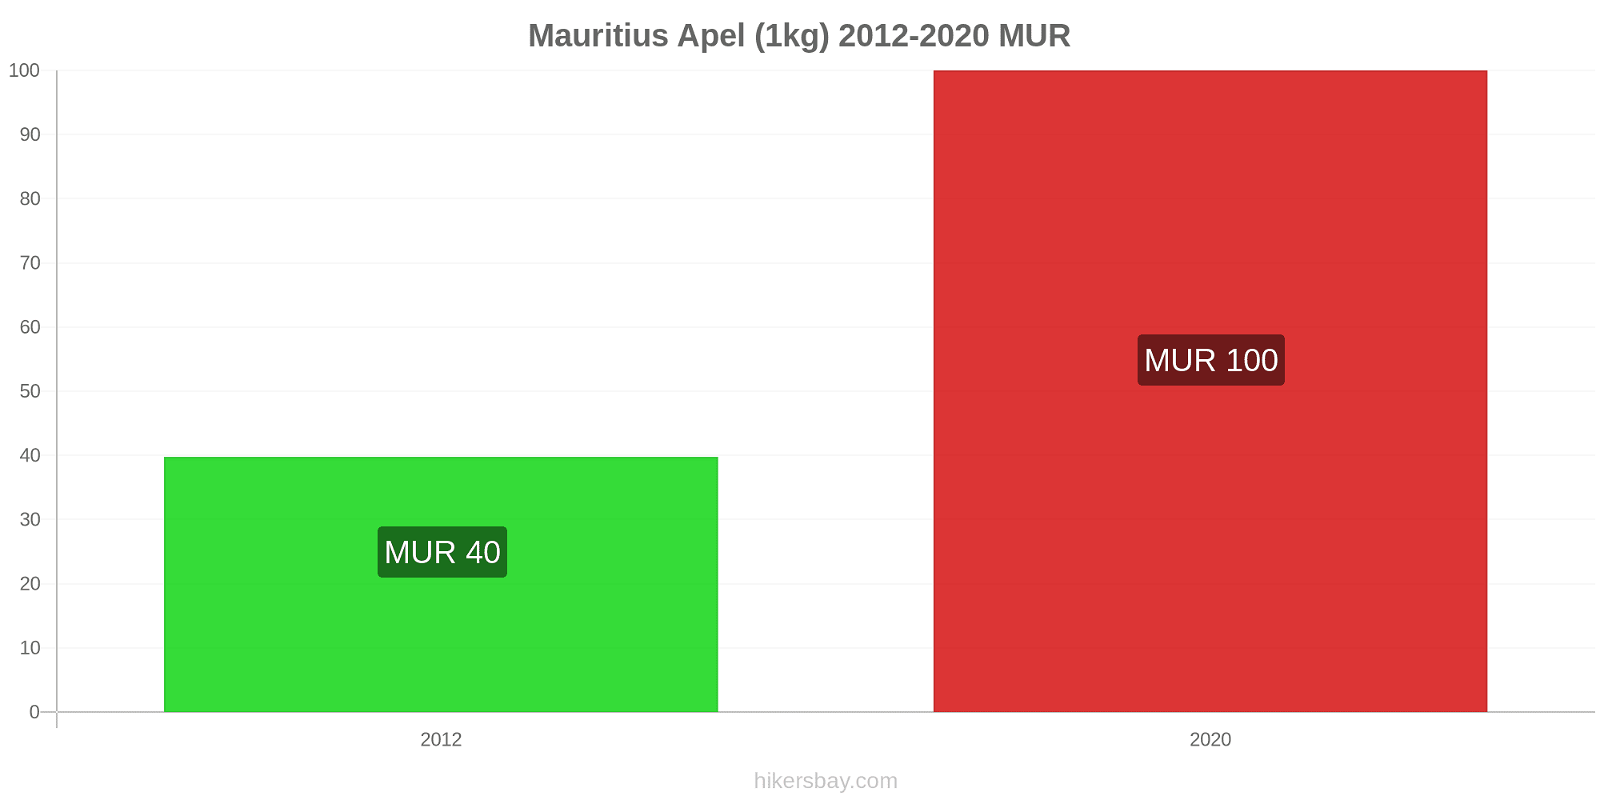 Mauritius perubahan harga Apel (1kg) hikersbay.com